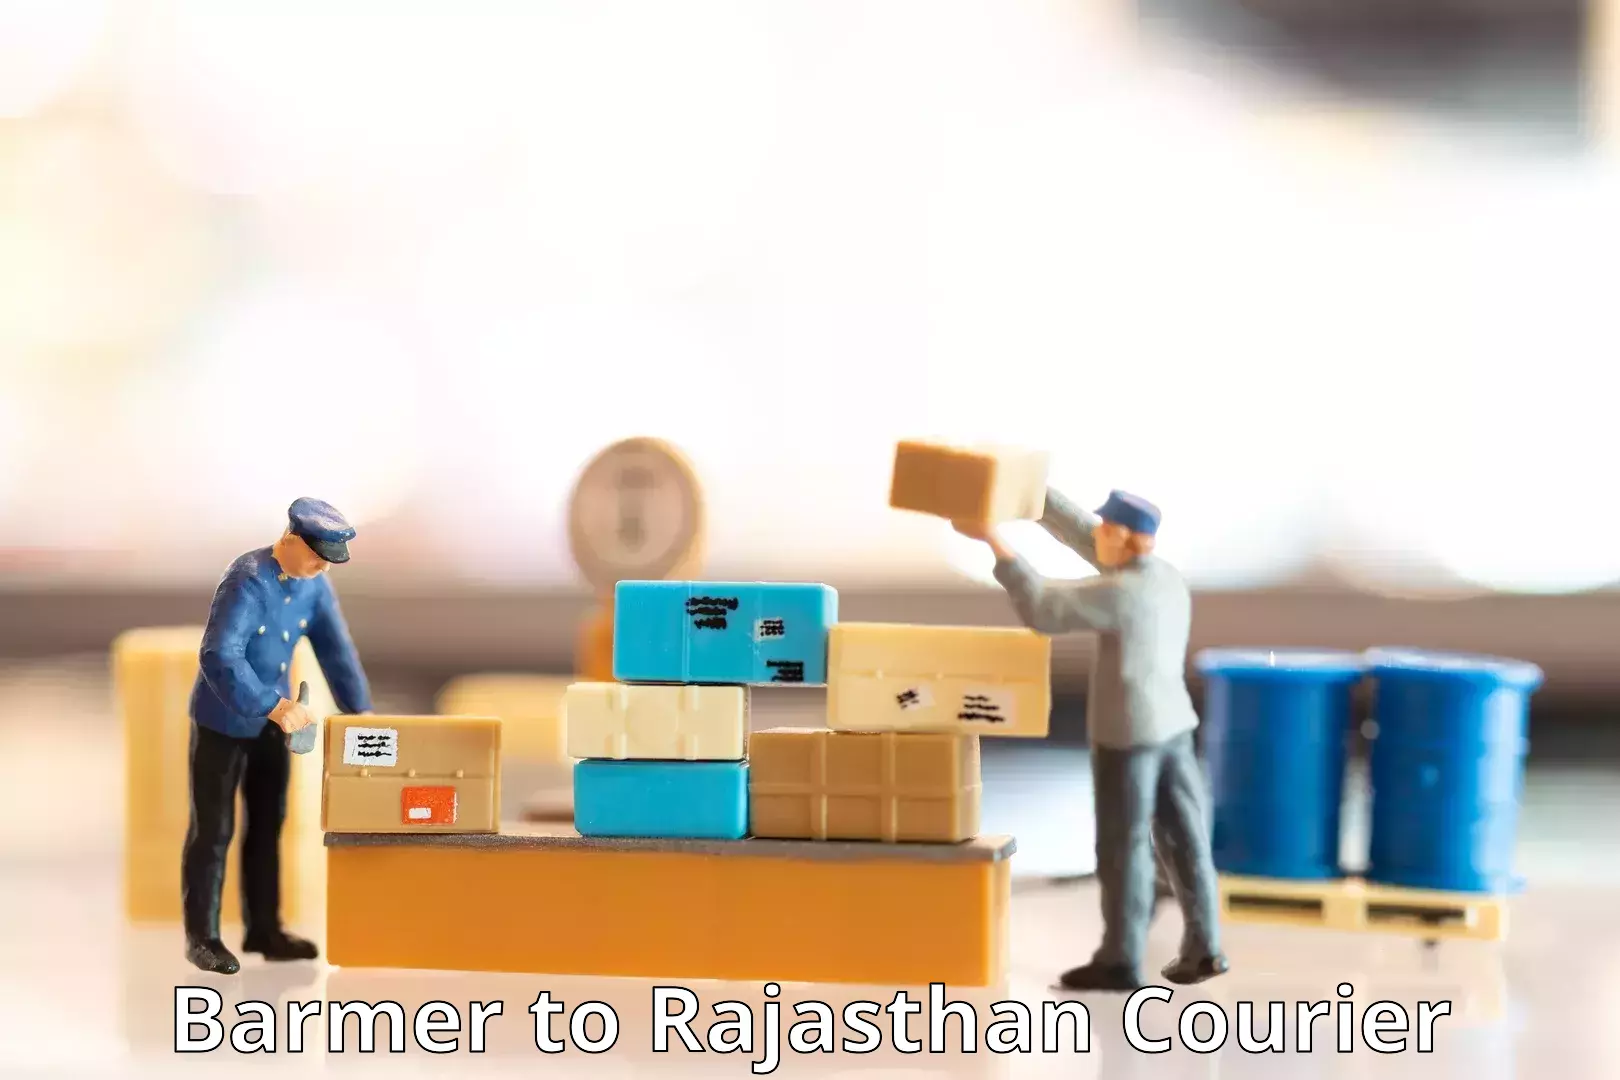 Digital courier platforms Barmer to Rajasthan